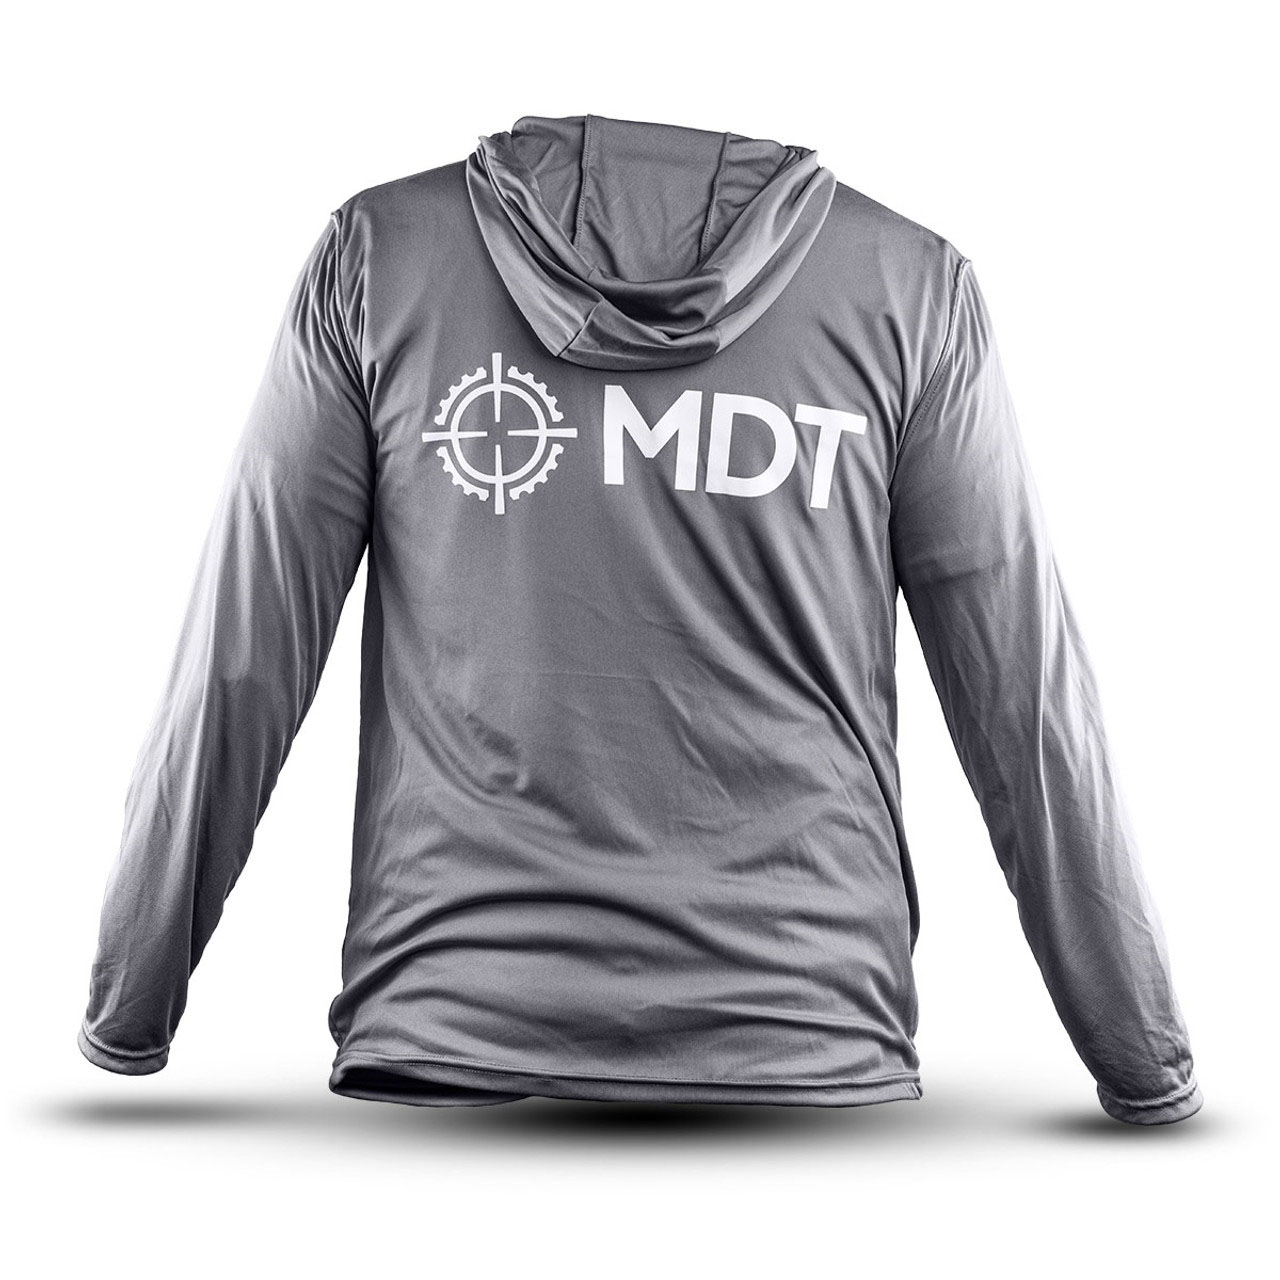 MDT Merchandise - MDT Sun Shirt Hoodies - Unisex - S - GRY